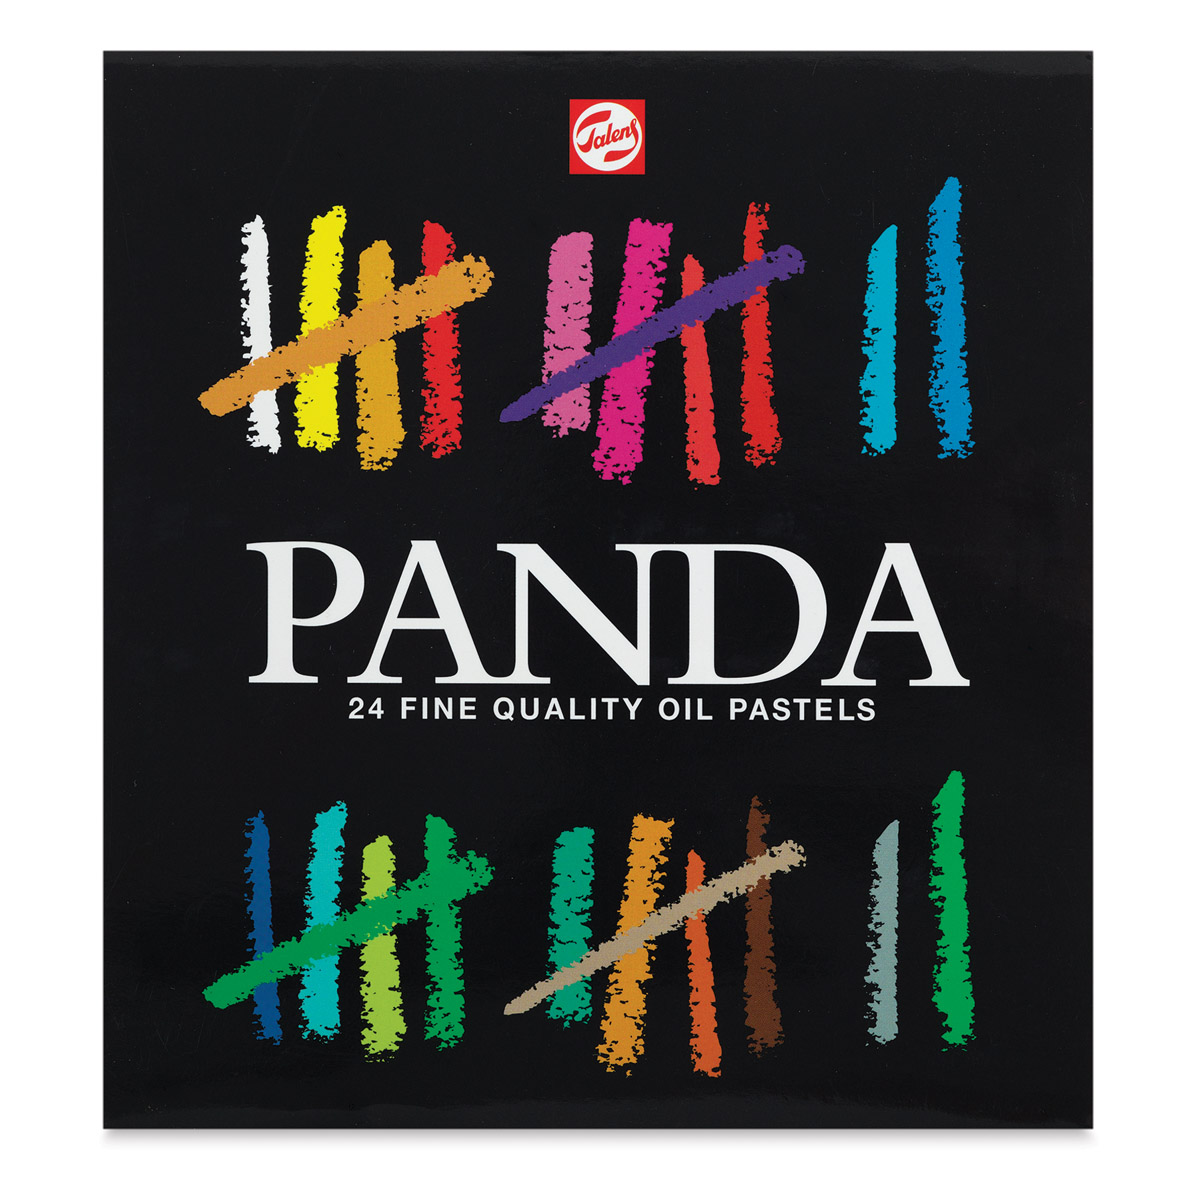 Royal Talens Panda Oil Pastels - Set of 24, Assorted Colors